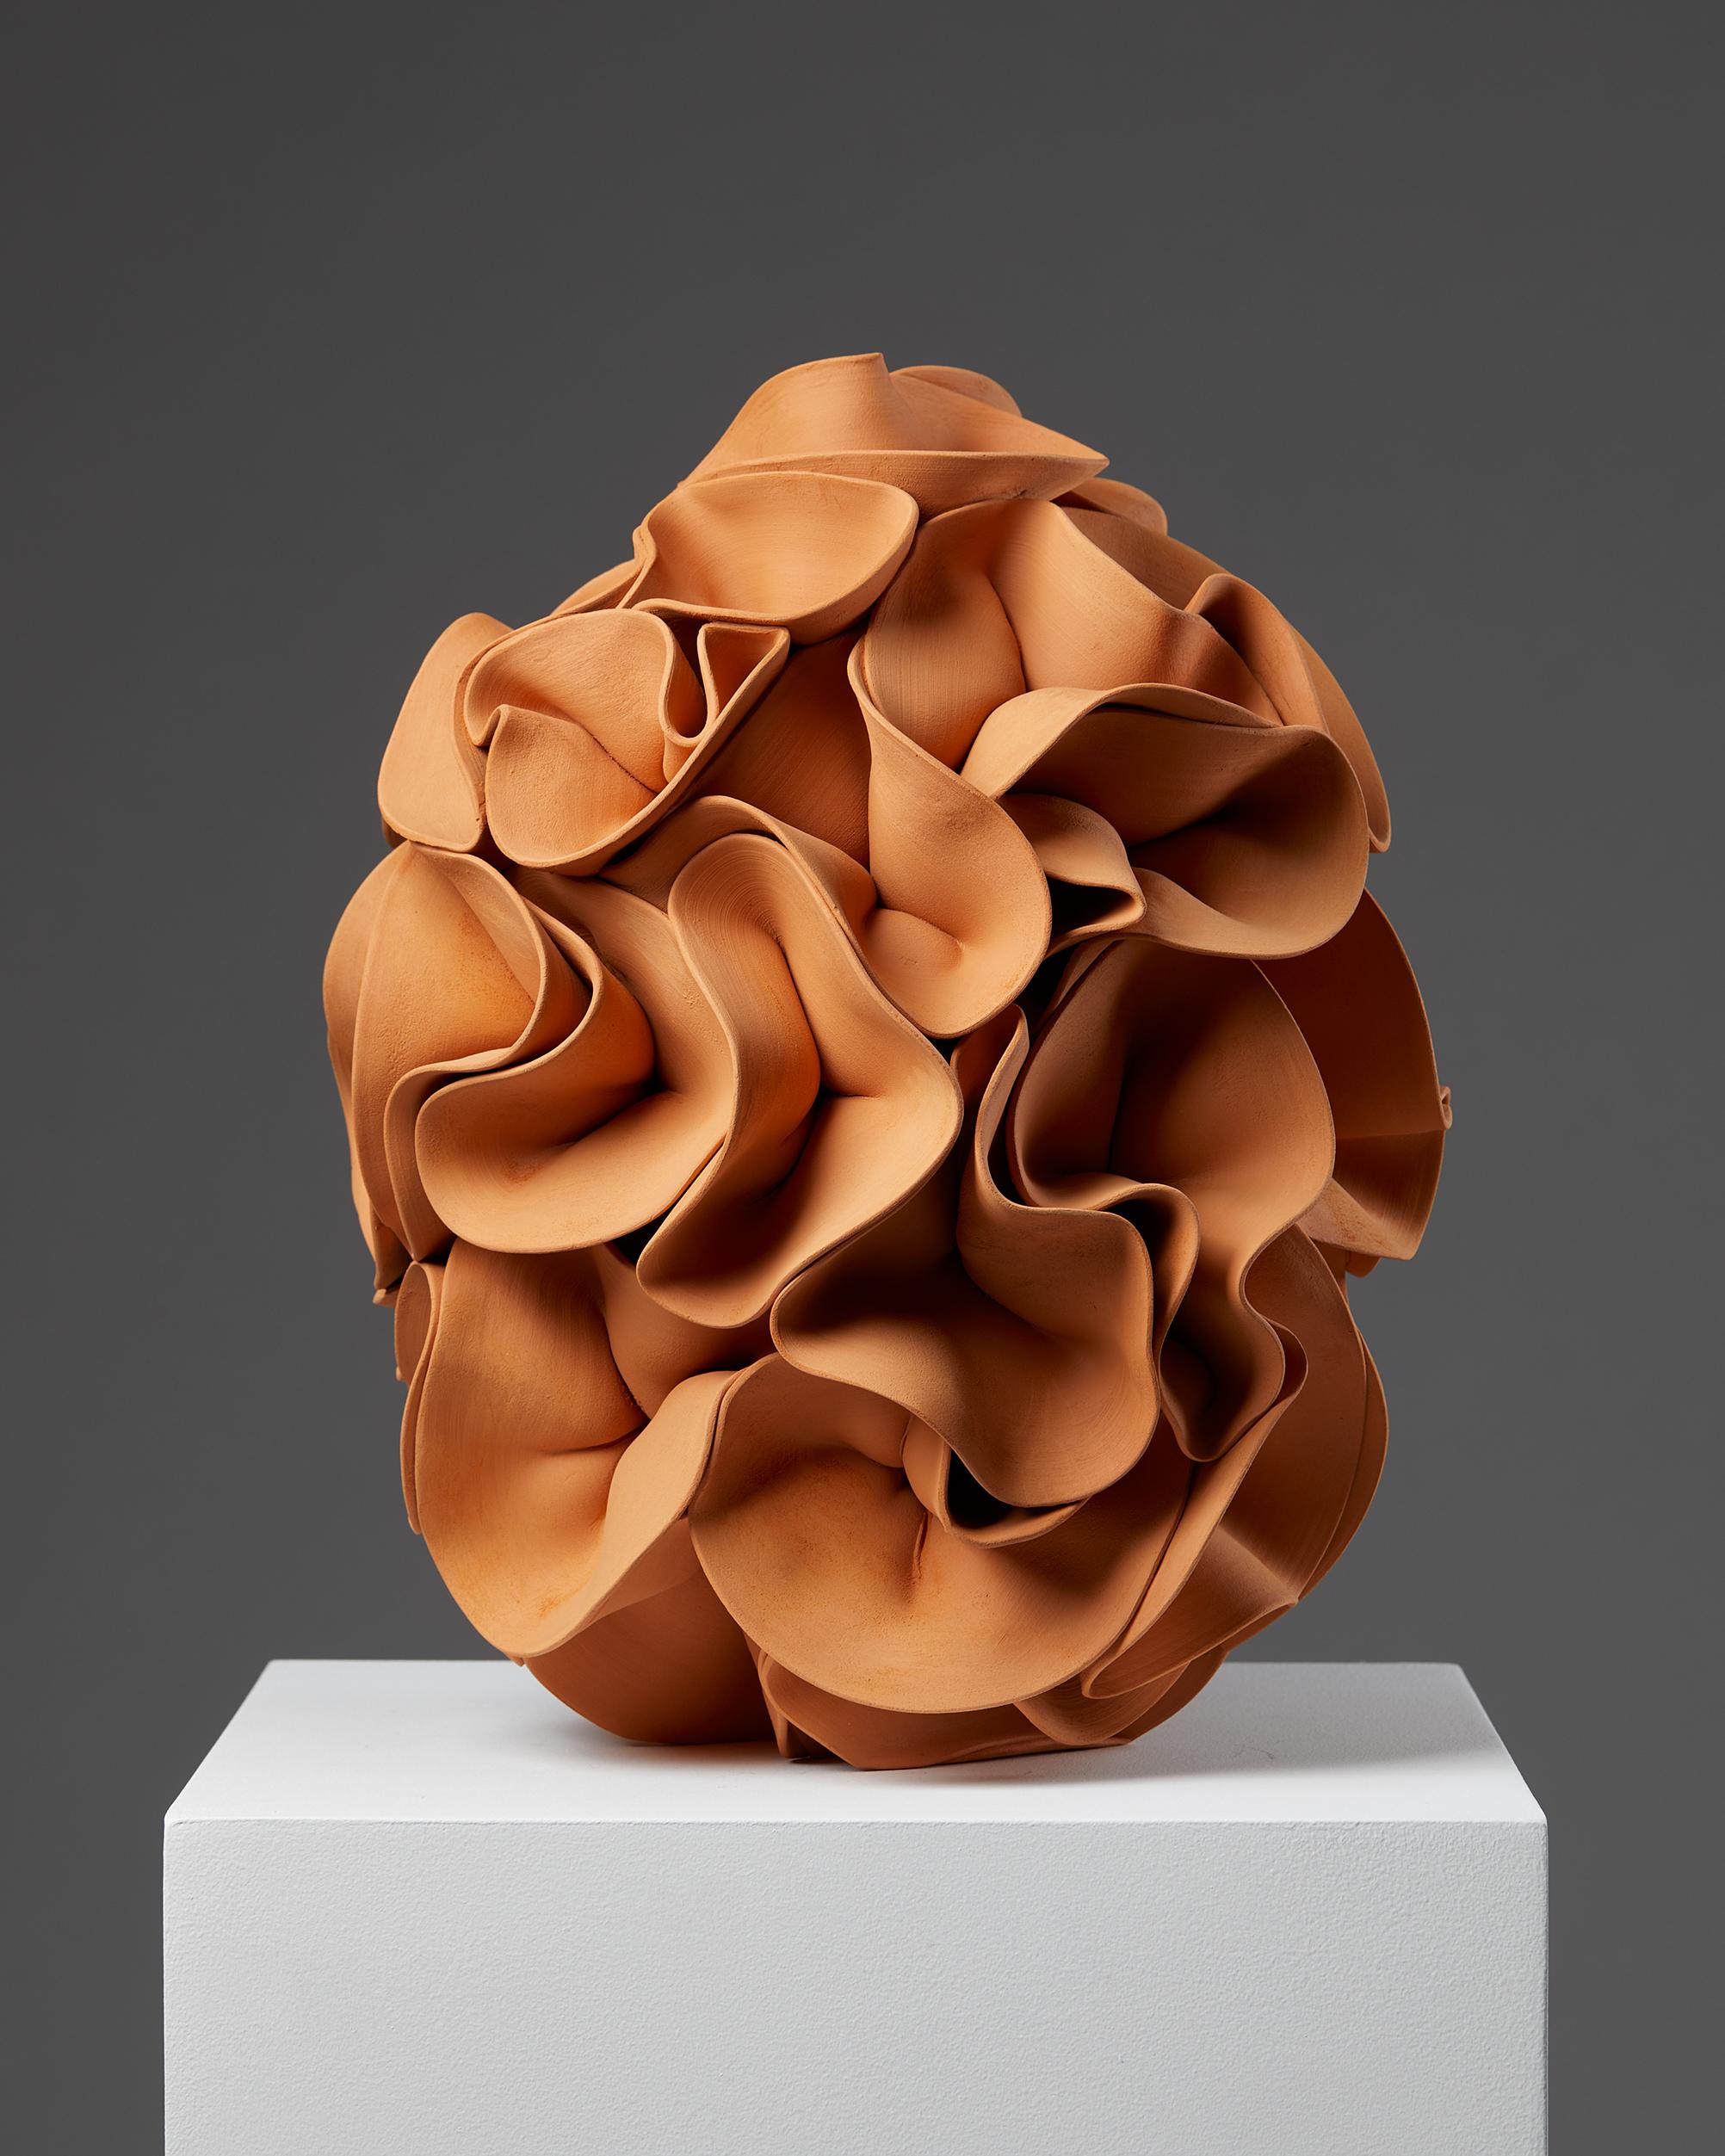 Mid-Century Modern Ceramic Sculpture ‘Hybrid’ by Alvina Jakobsson, Sweden, 2022